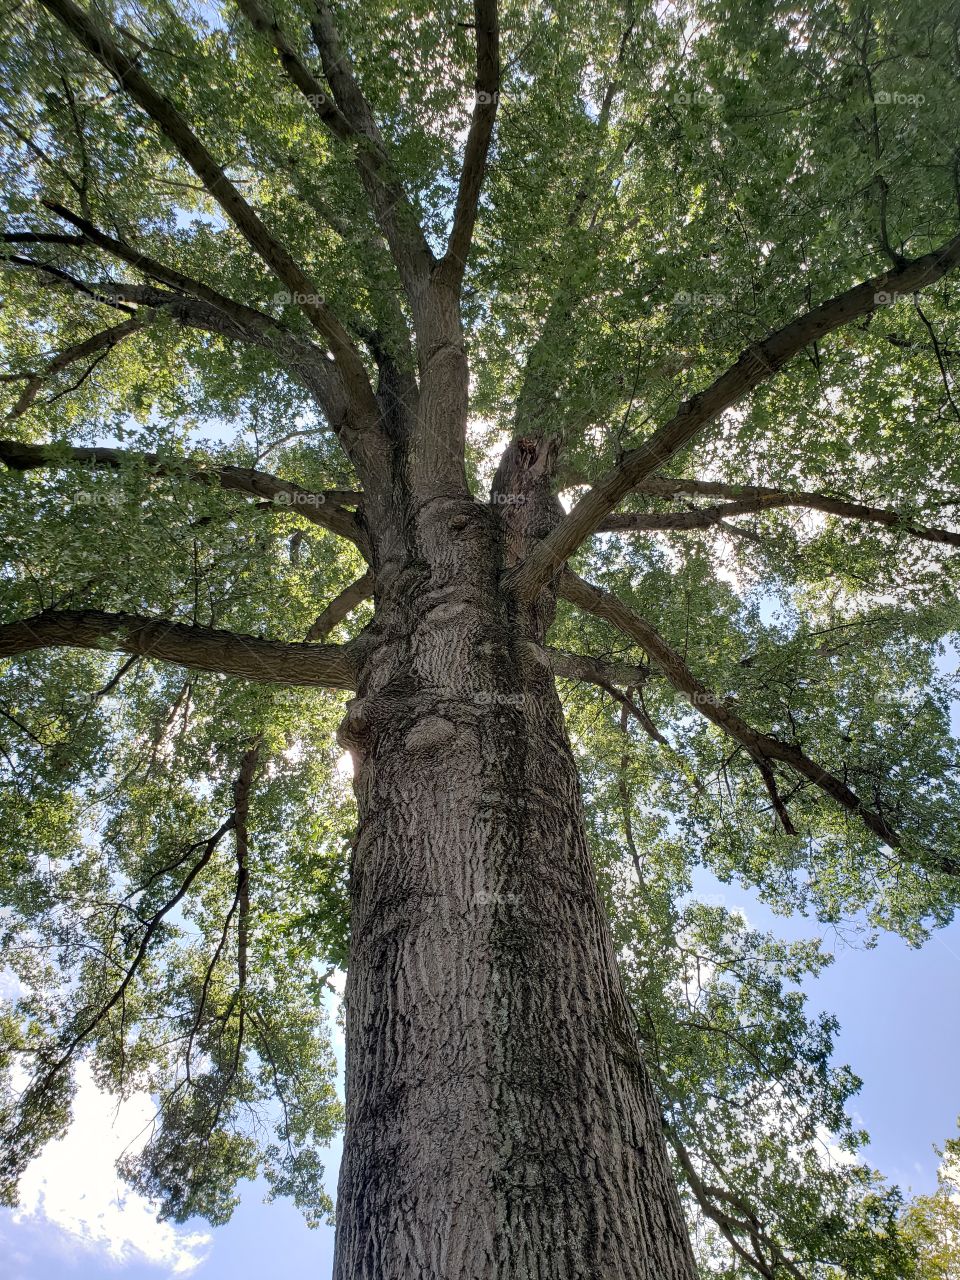 Tree, bottom to top